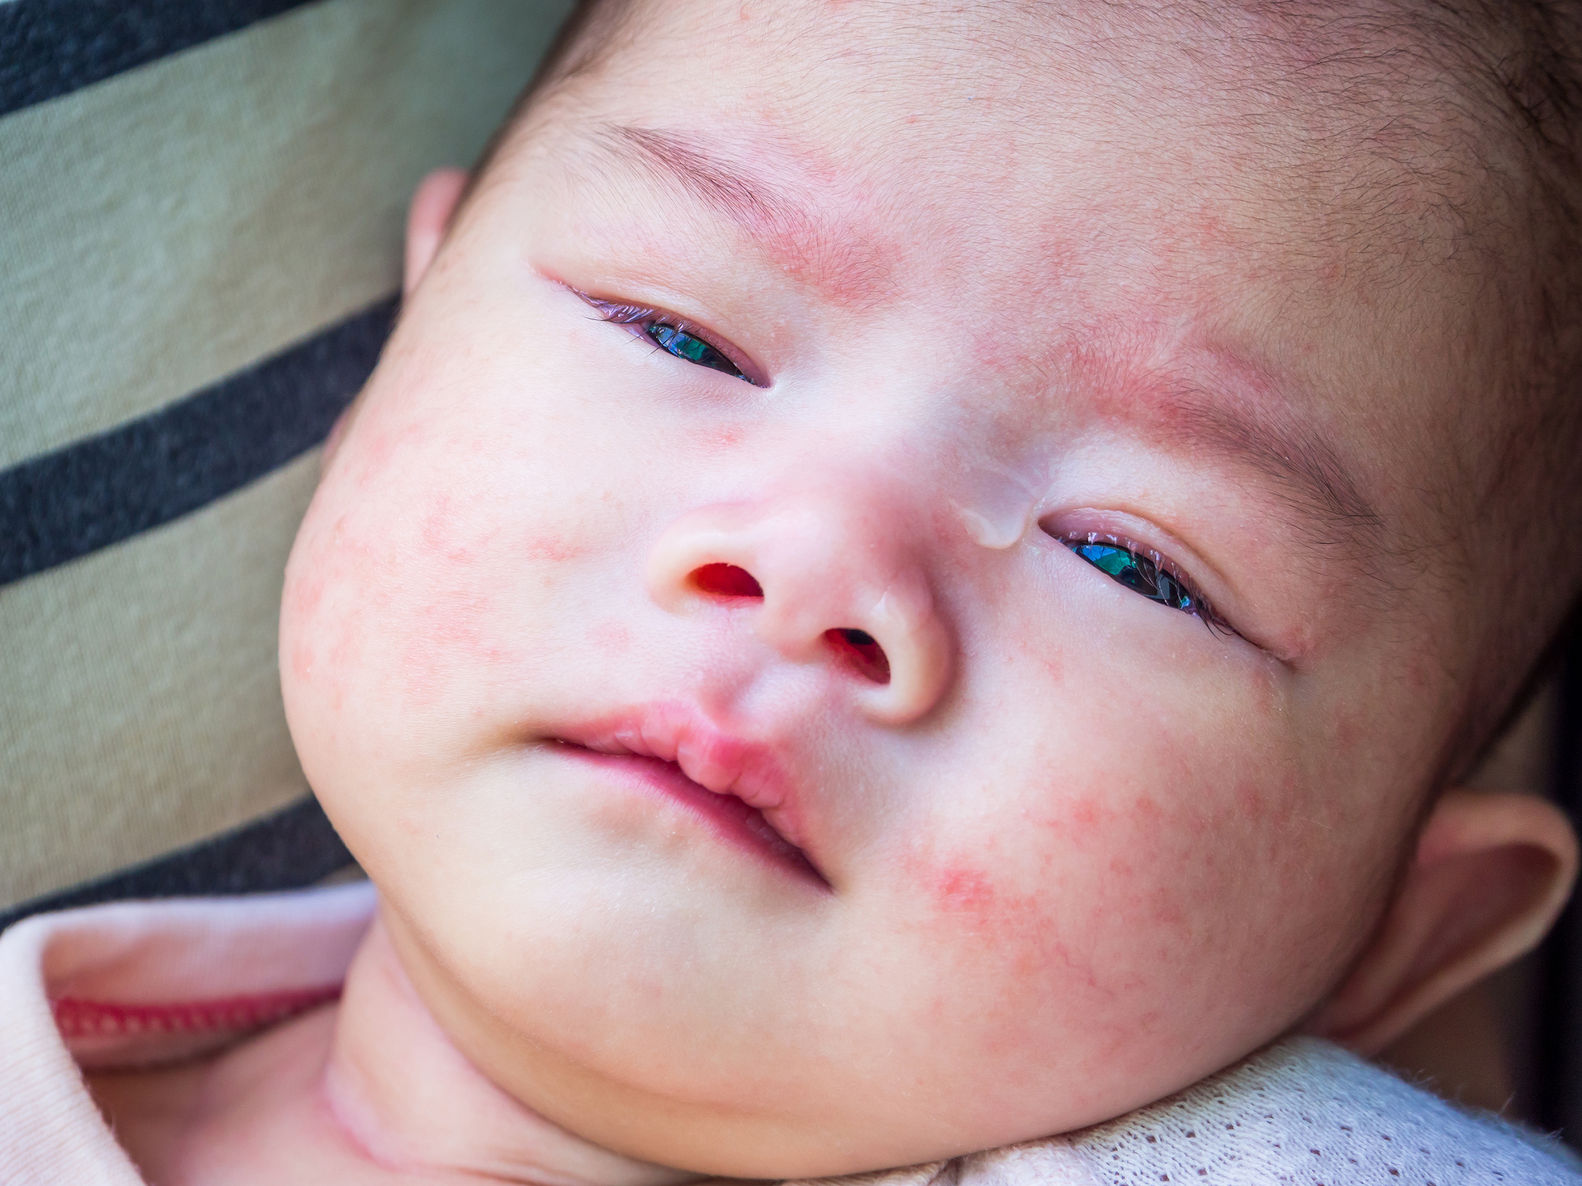 82147608 Newborn Baby With Dermatitis Allergy On Face